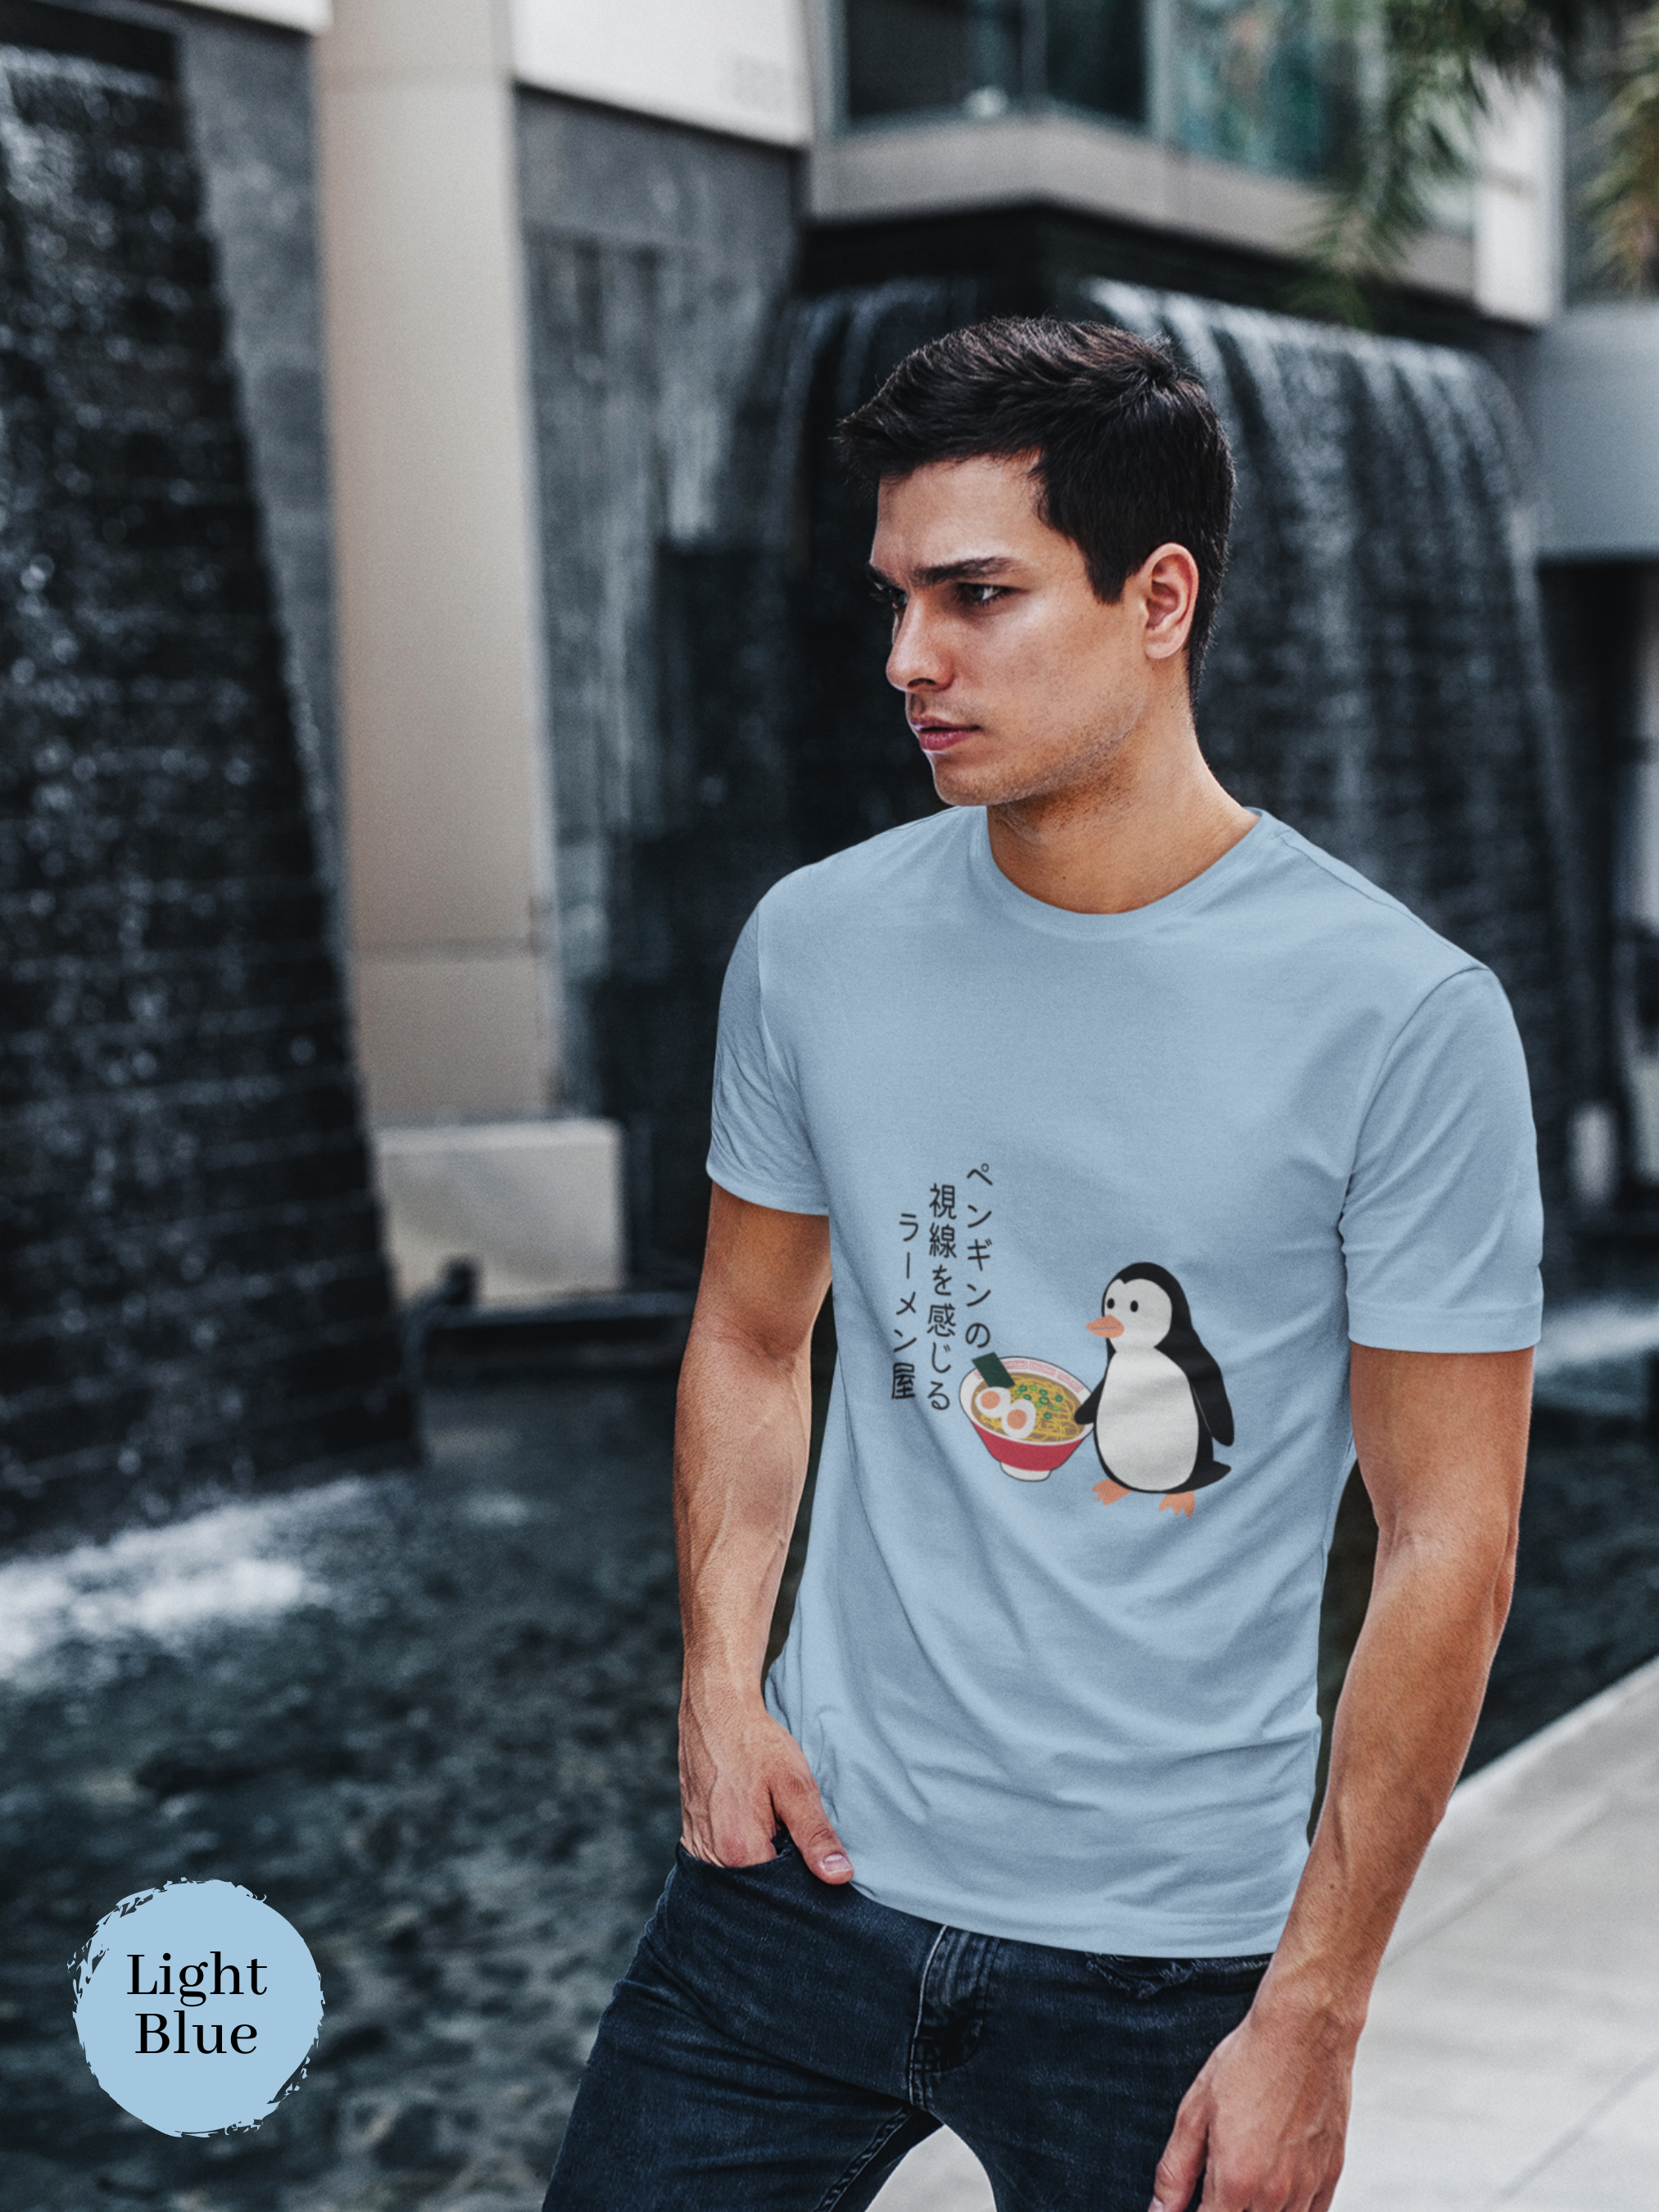 Haiku Ramen T-shirt: Penguin's Gaze at the Ramen Shop - Japanese Foodie Shirt with Ramen Art